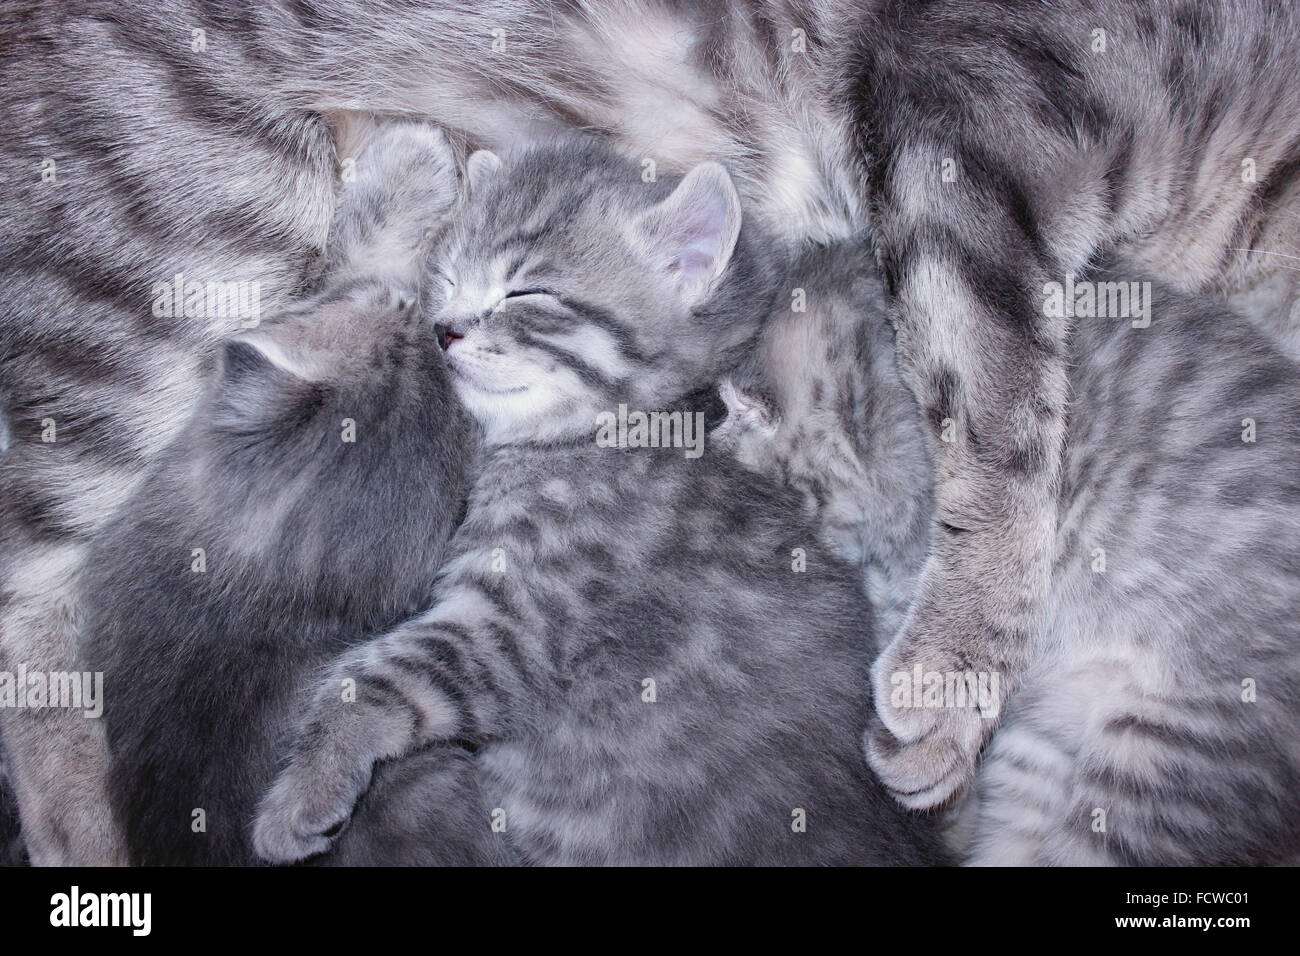 sleeping and embracing kittens of Scottish Straight Stock Photo